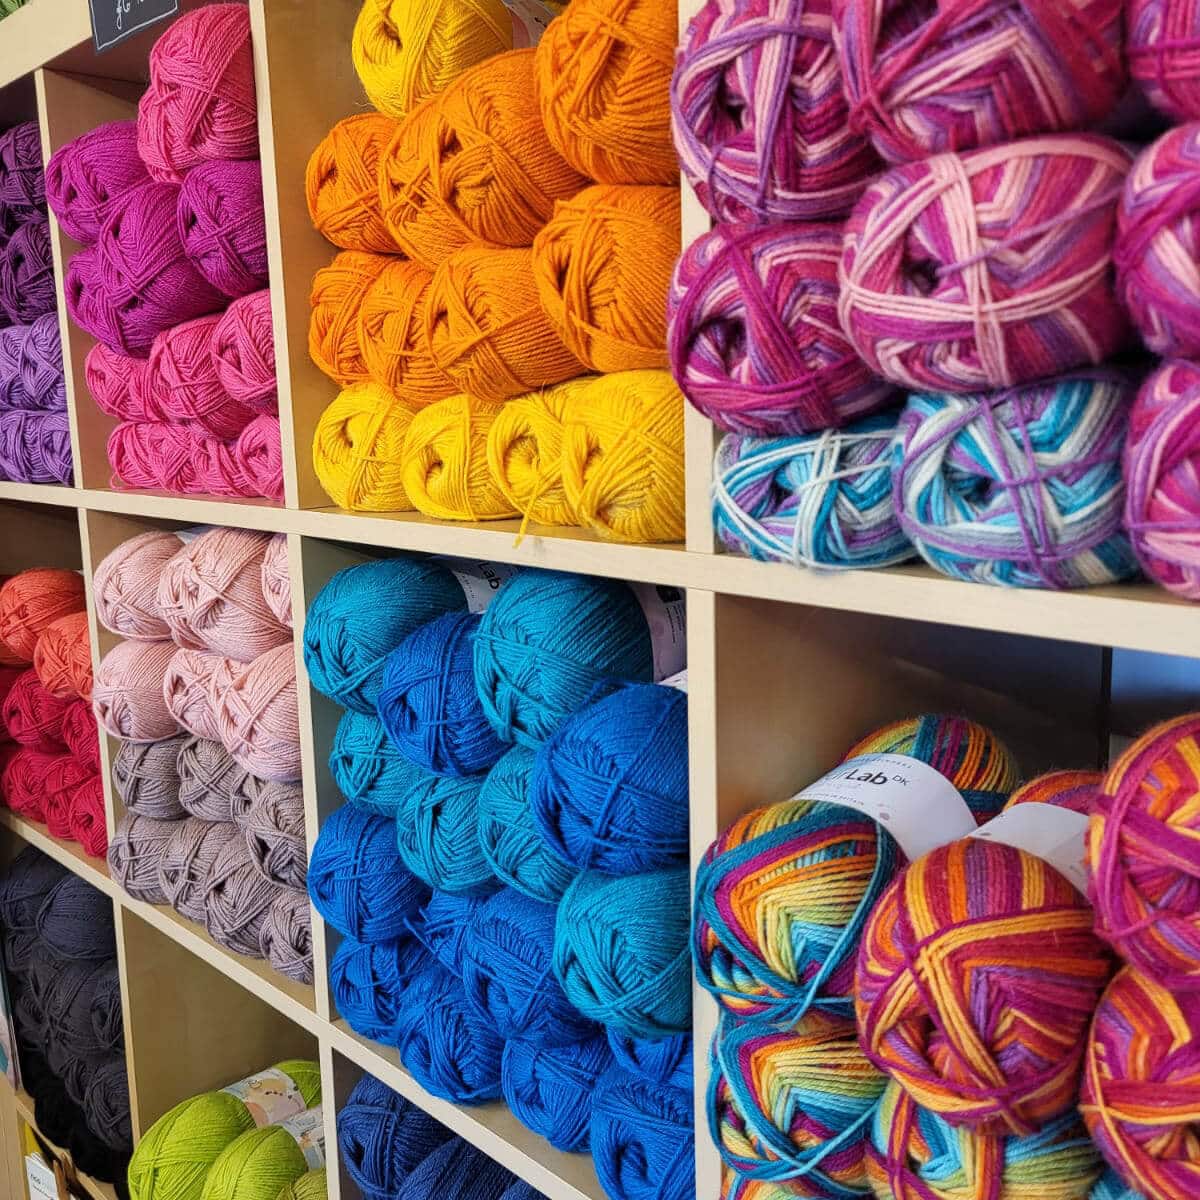 Shelf full of yarn